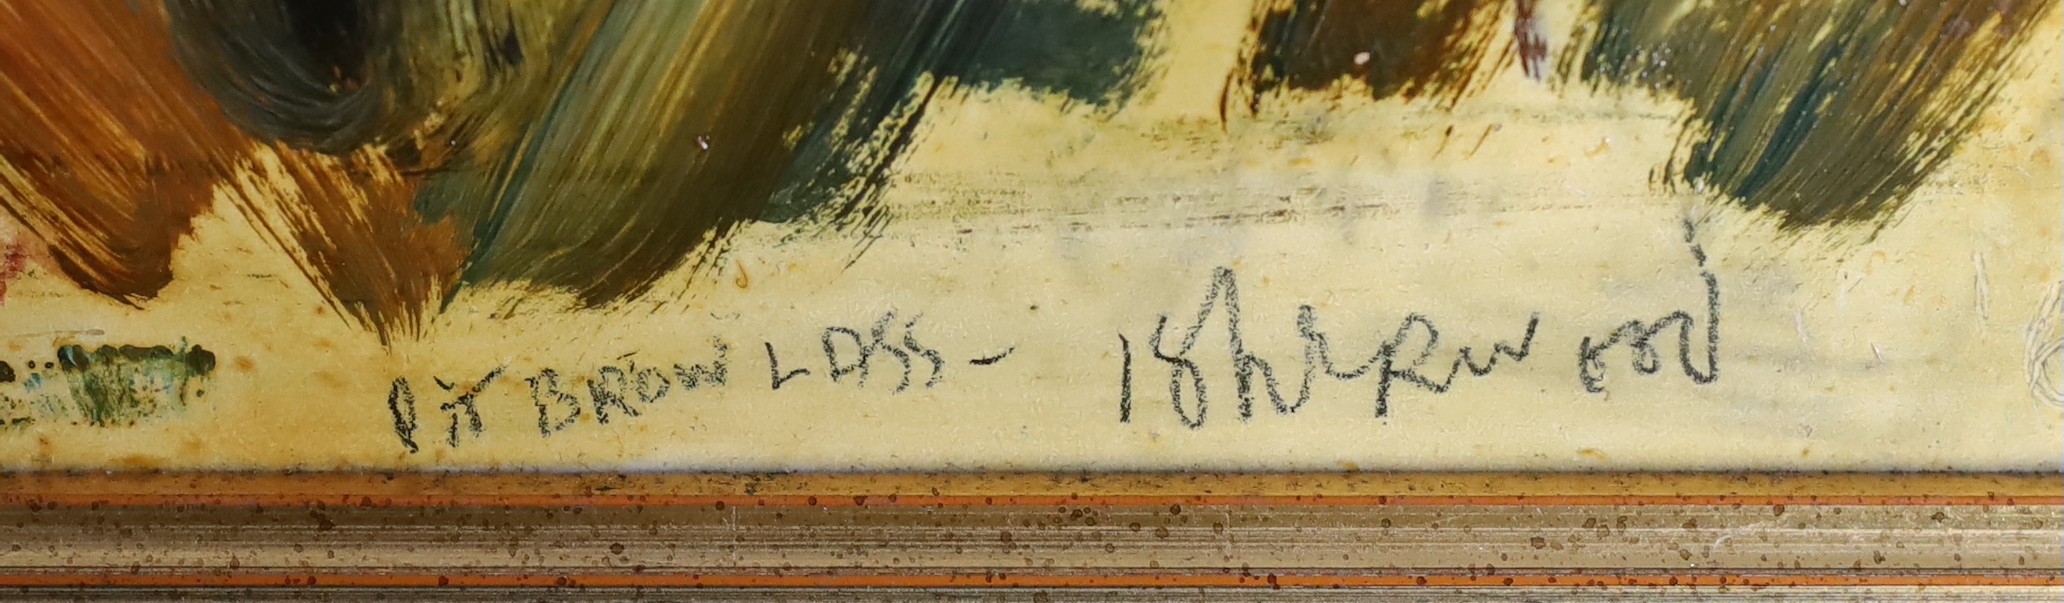 James Lawrence Isherwood (British, 1917- 1989), 'Pit Brow Lass', oil on board, 39 x 29.5cm